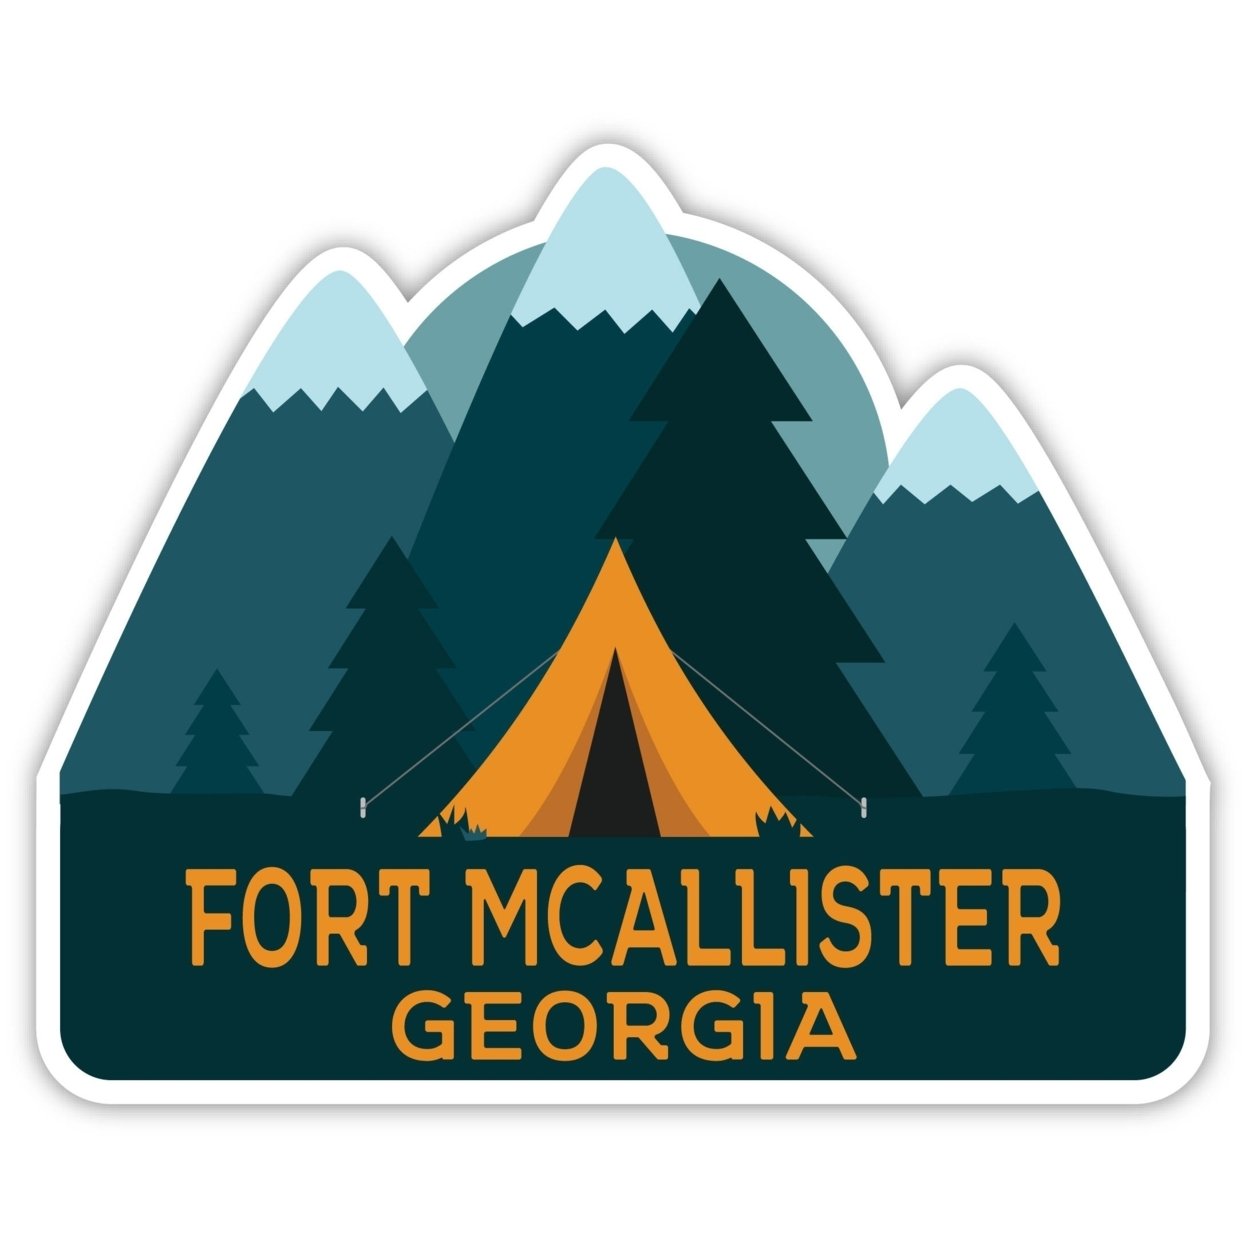 Fort McAllister Georgia Souvenir Decorative Stickers (Choose Theme And Size) - Single Unit, 4-Inch, Tent